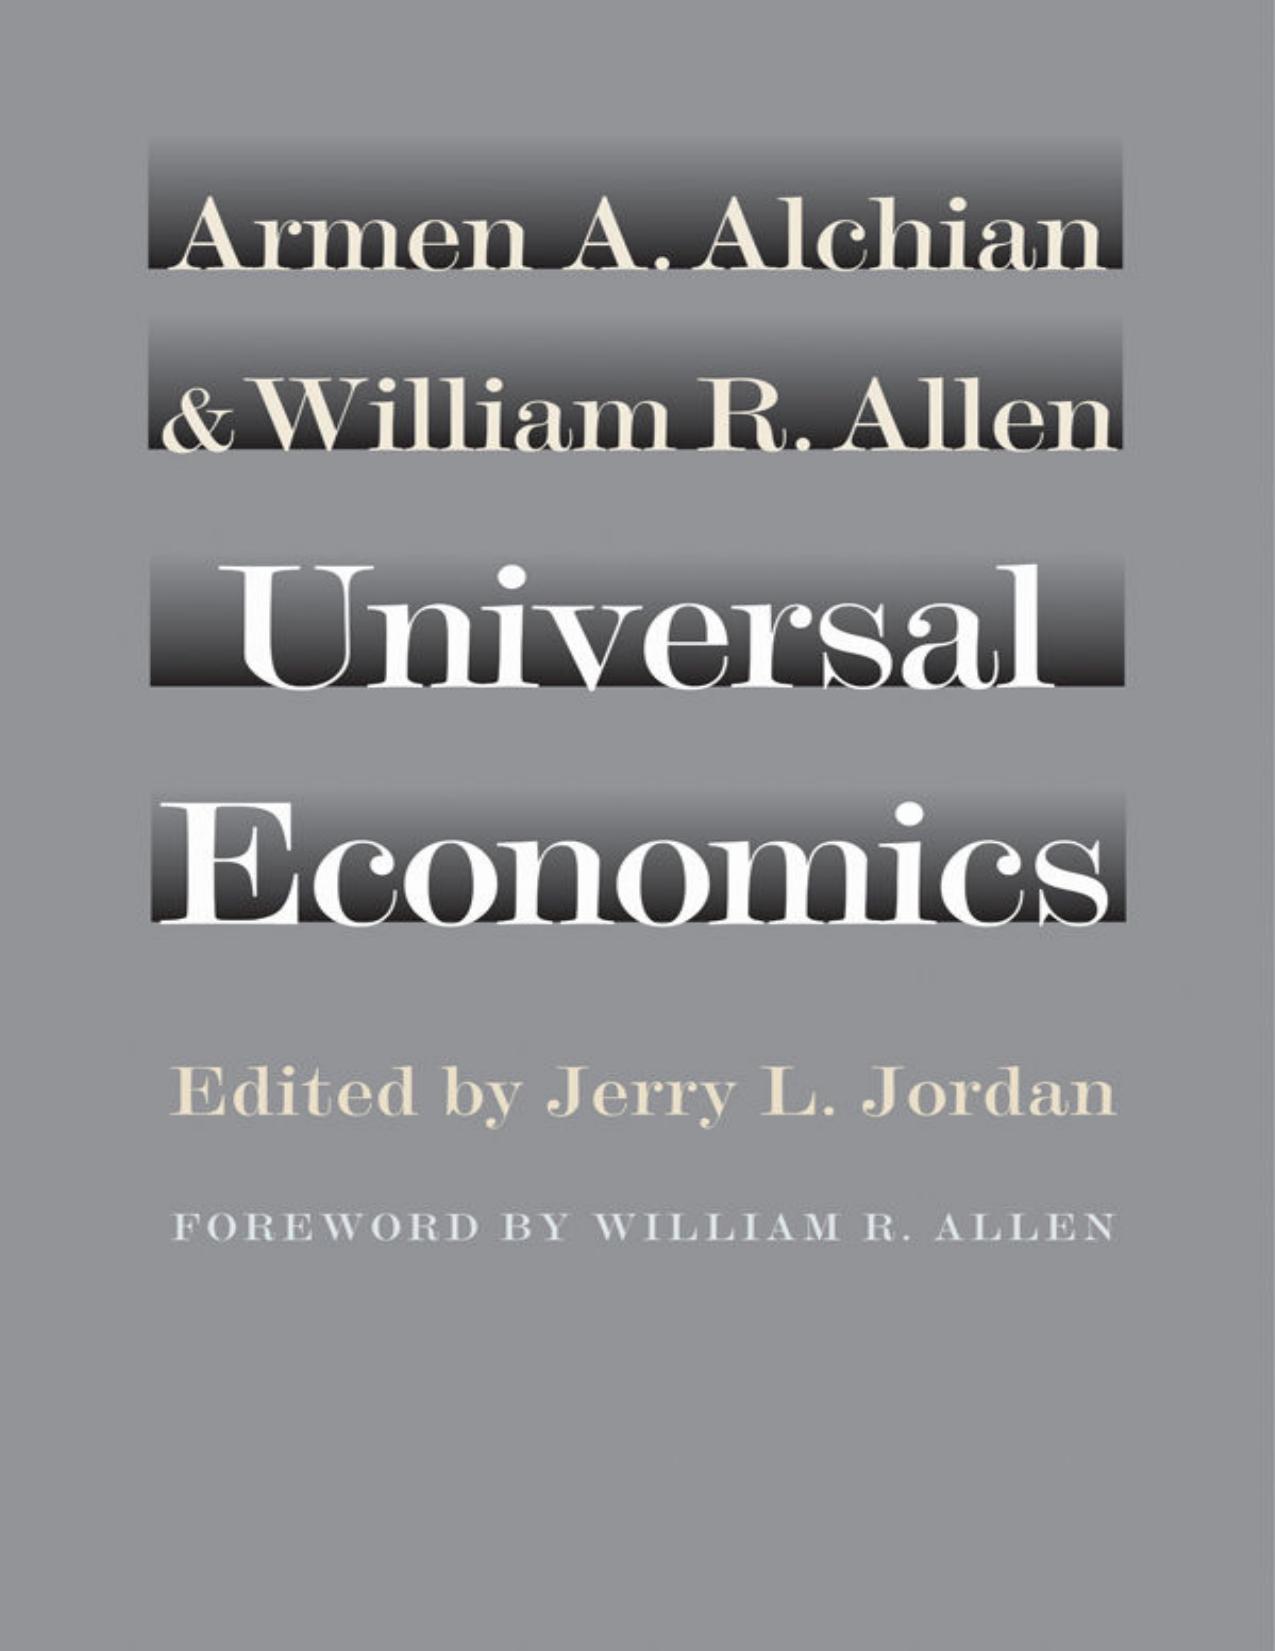 (eBook PDF)Universal Economics by Armen A. Alchian,William R. Allen